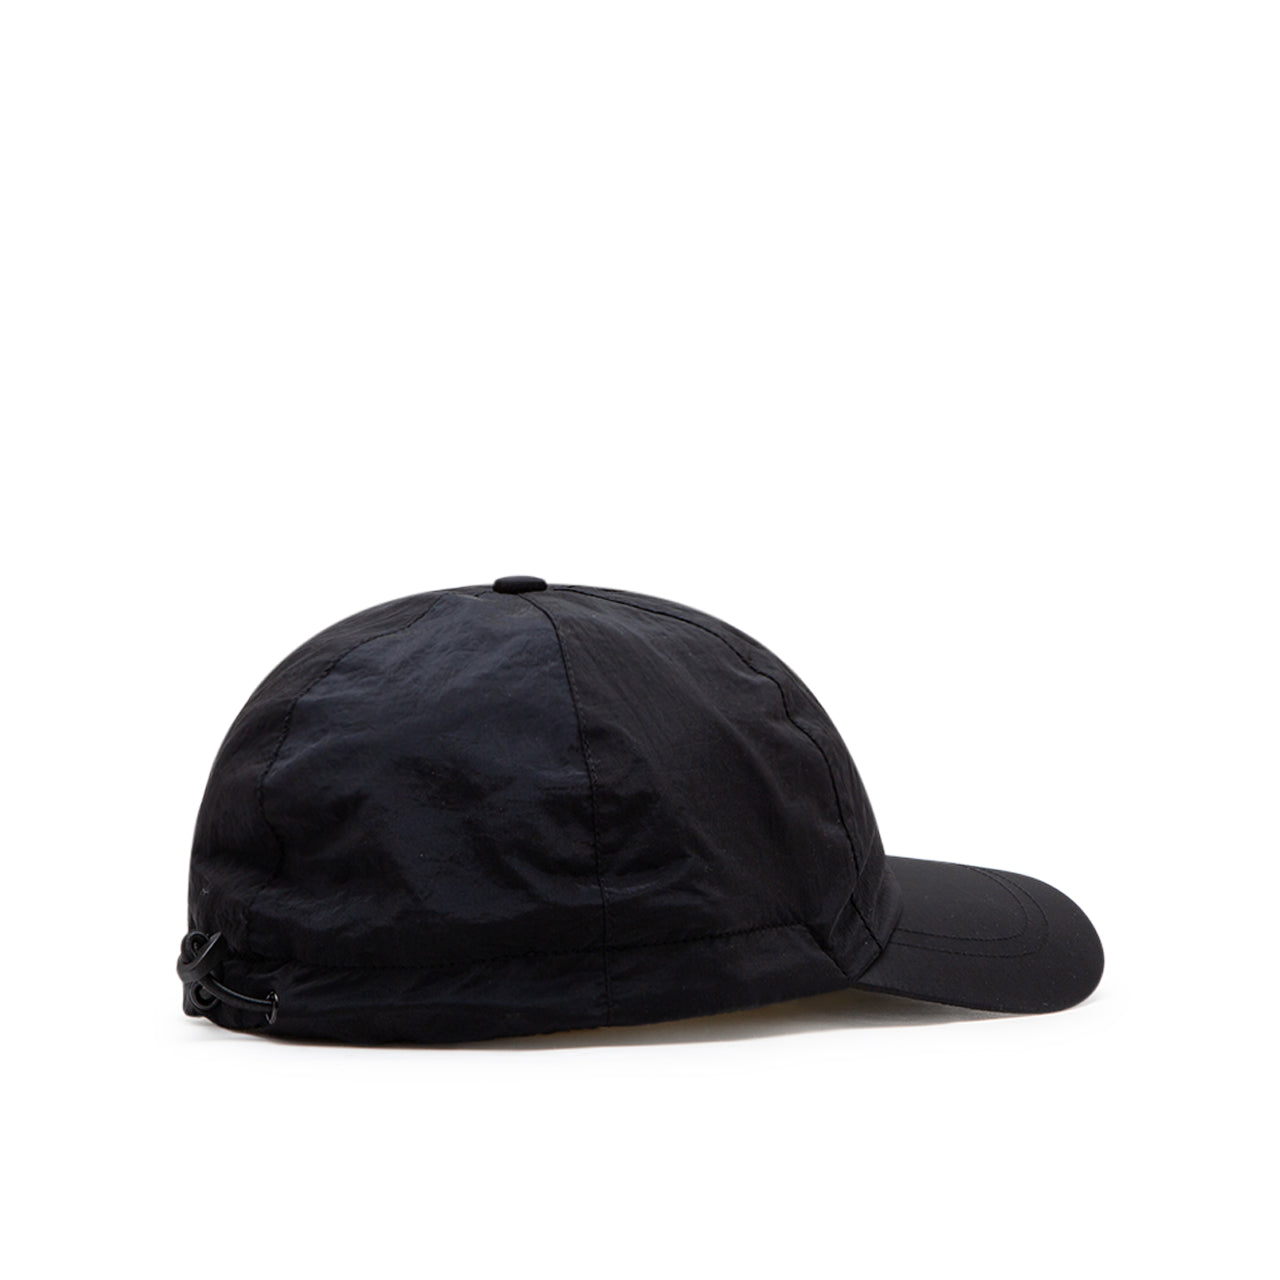 stone island nylon cap (black)